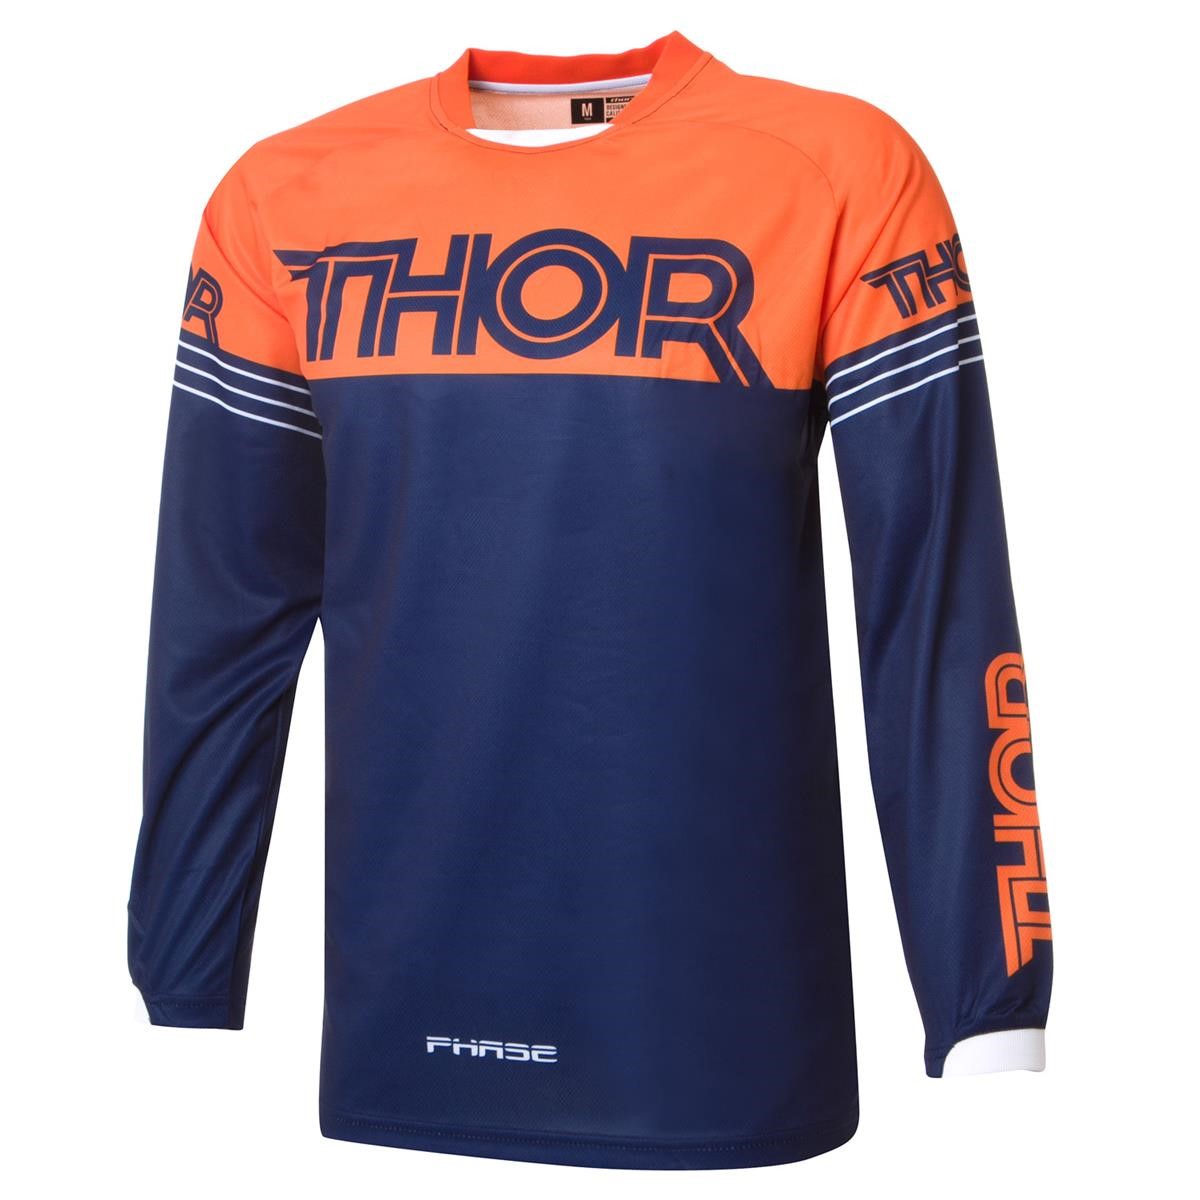 Thor Jersey Phase Hyperion Navy/Orange